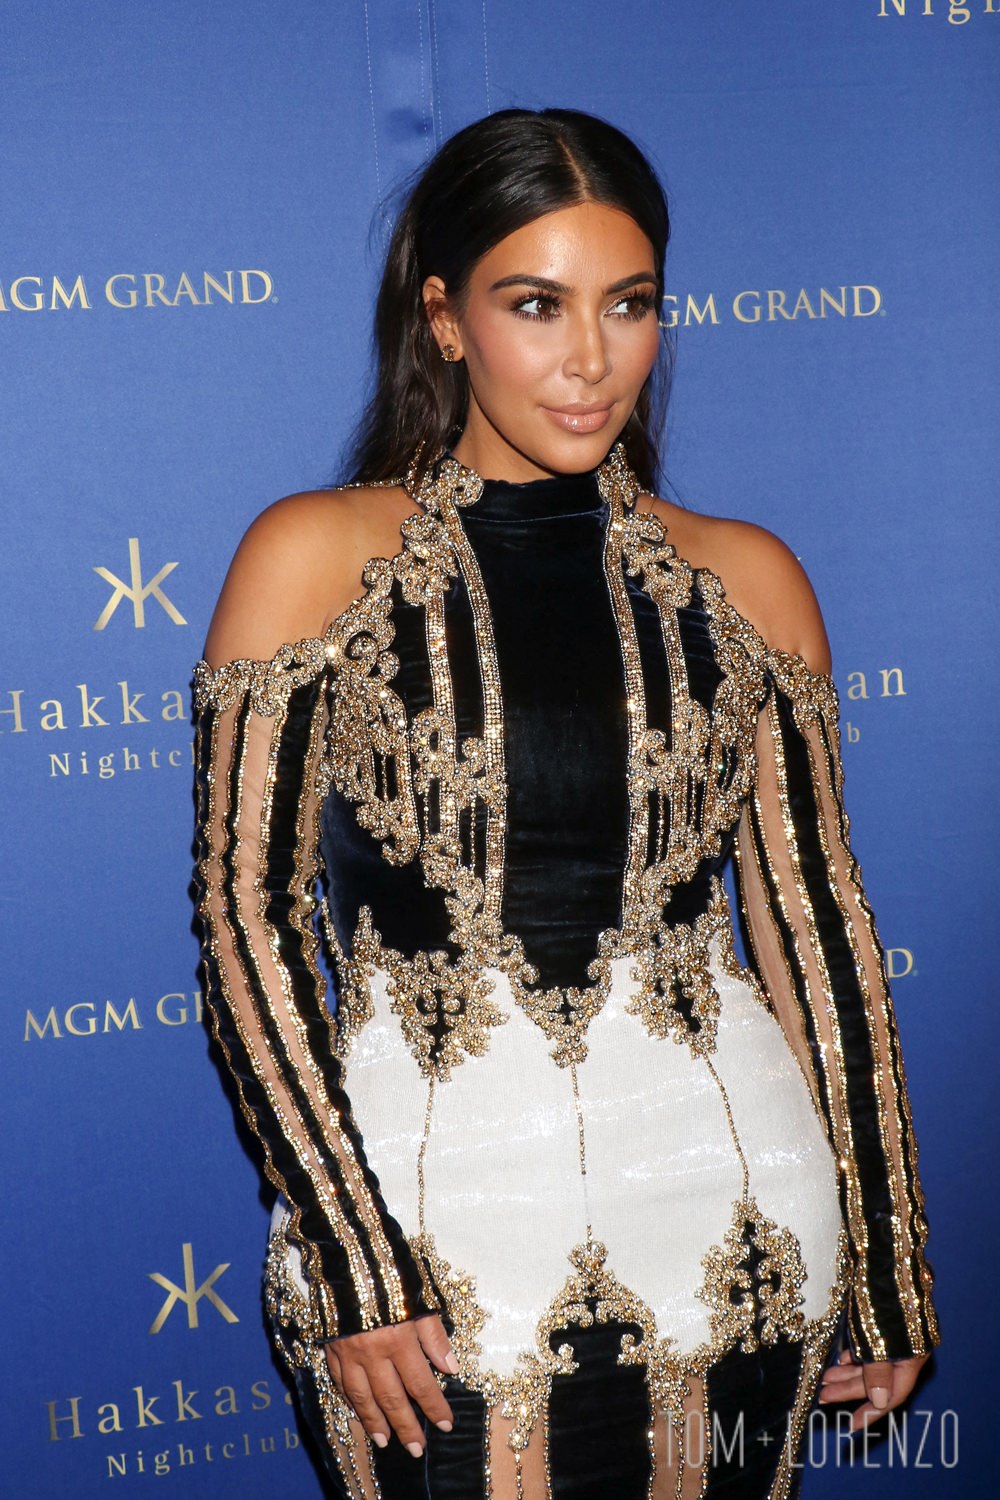 Kim-Kardashian-Hakkasan-Las-vegas-Nightclub-Anniversary-Red-Carpet-Fashion-Balmain-Tom-Lorenzo-Site (1)